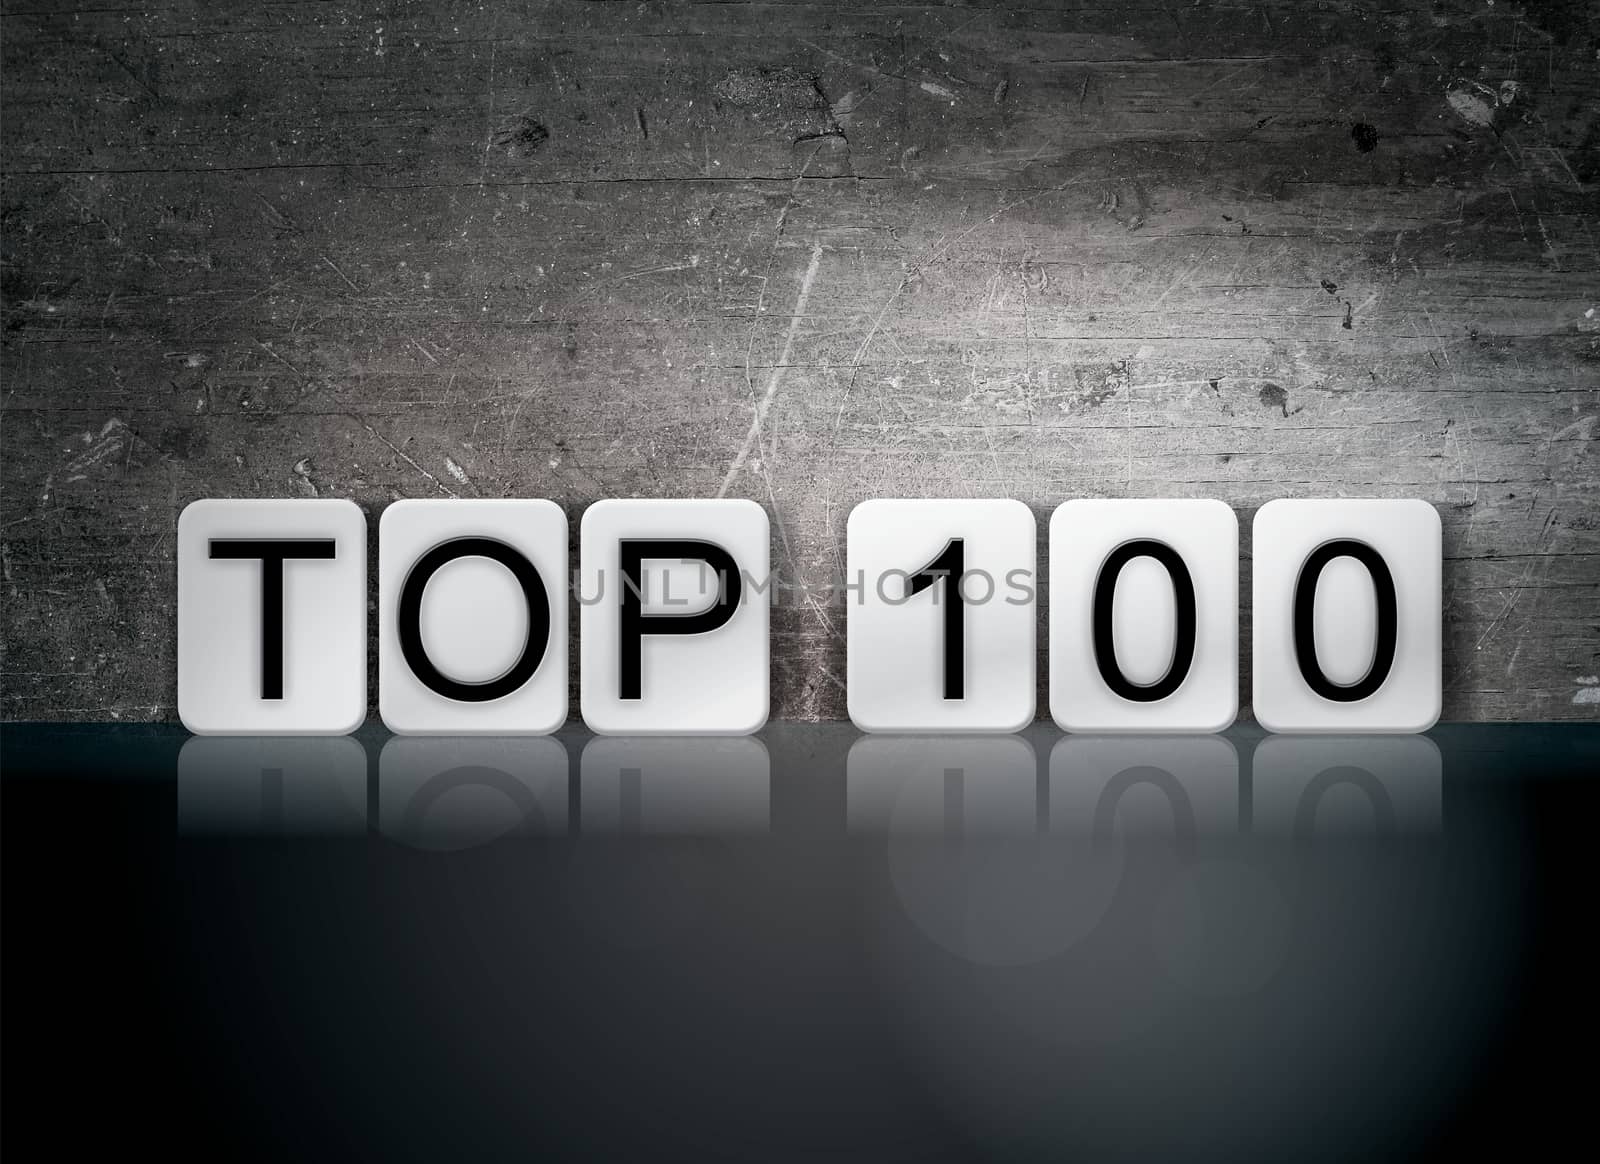 The word "Top 100" written in white tiles against a dark vintage grunge background.